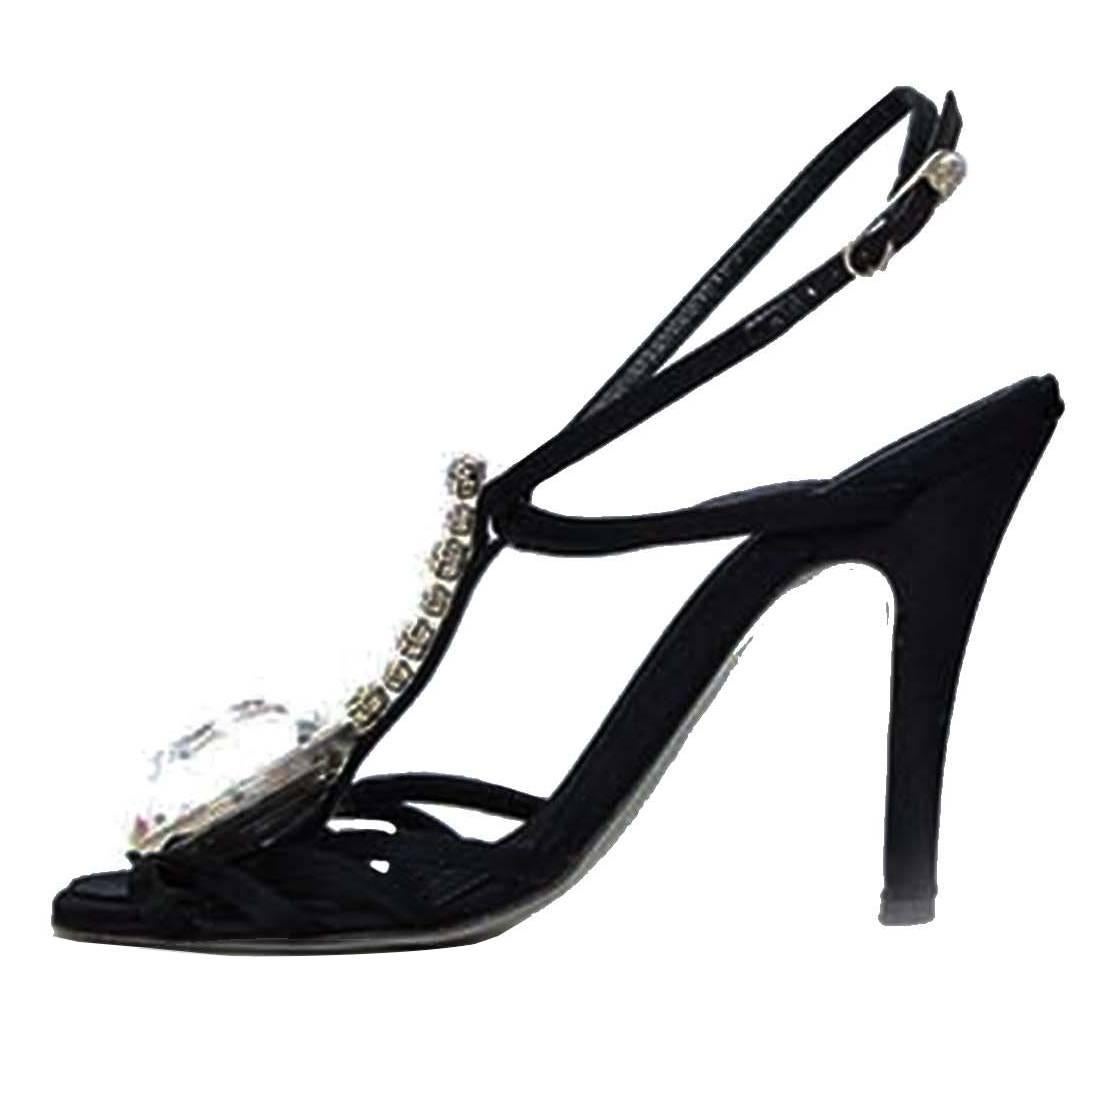 Chanel Black Satin & Crystal Evening Sandals sz 38